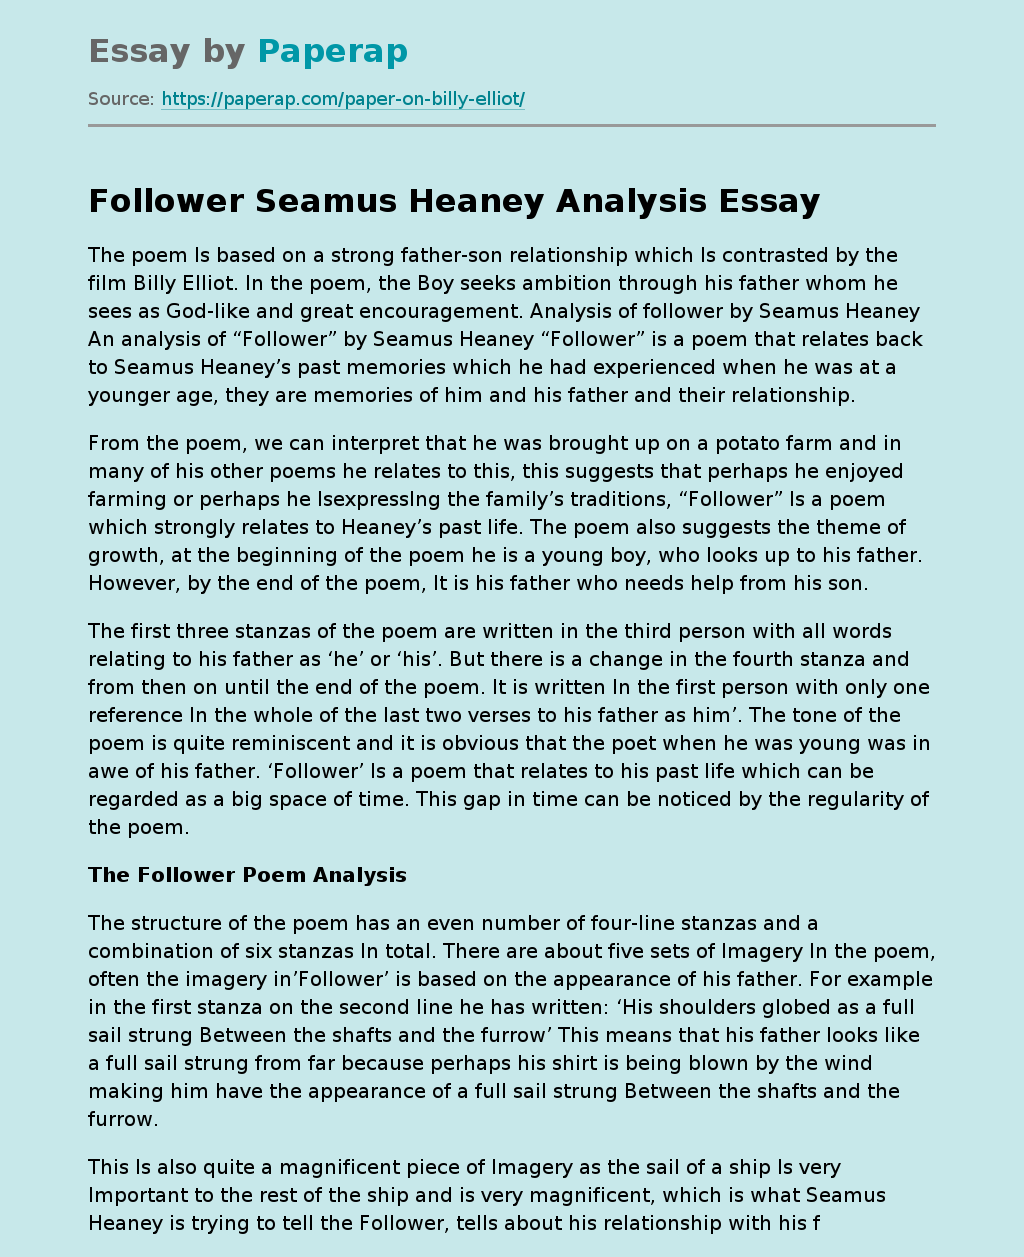 Follower Seamus Heaney Analysis